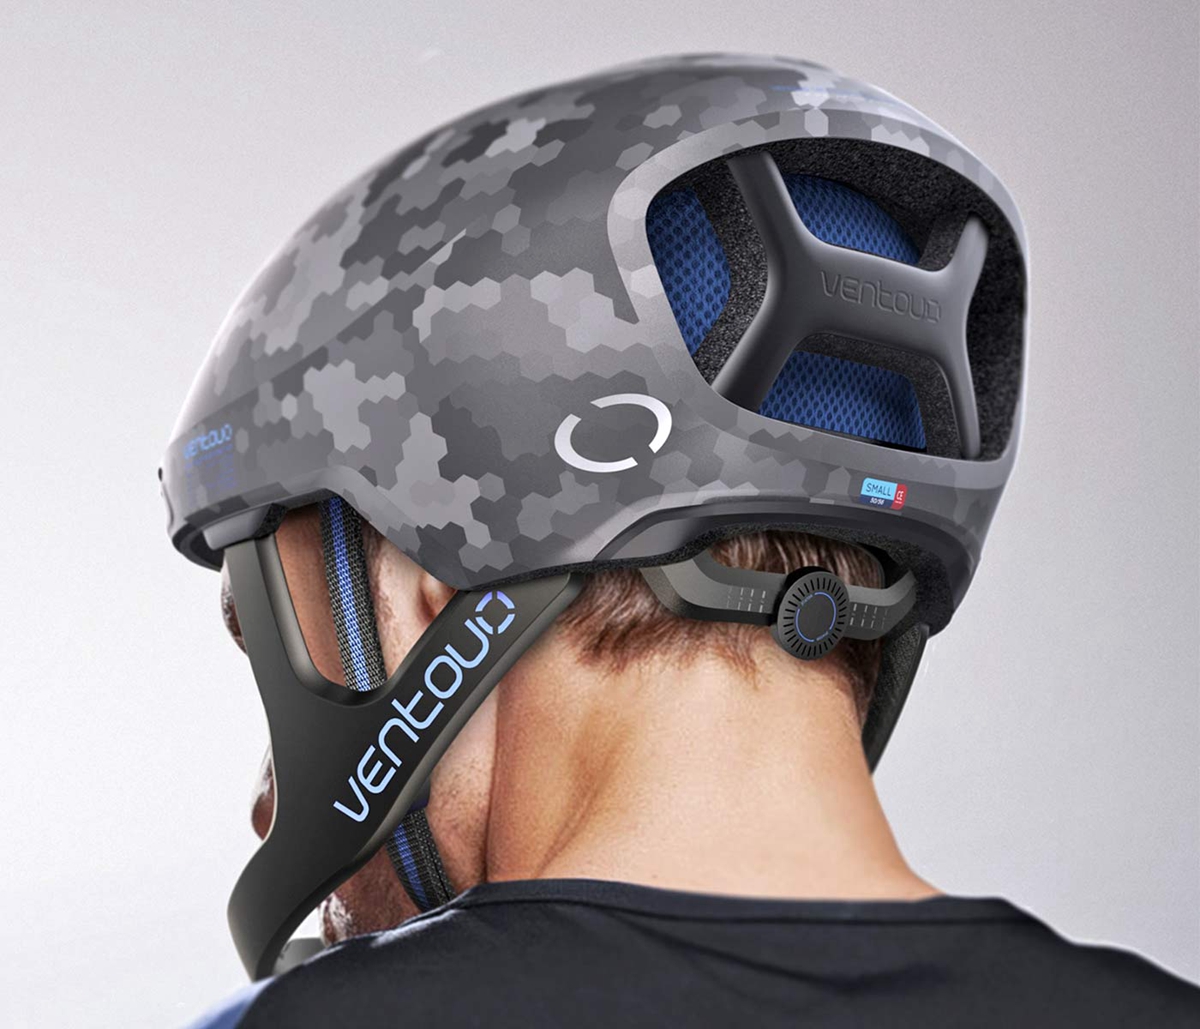 Ventoux-cycling-helmet_aero-full-face-road-bike-helmet-protection-concept_rear.jpg